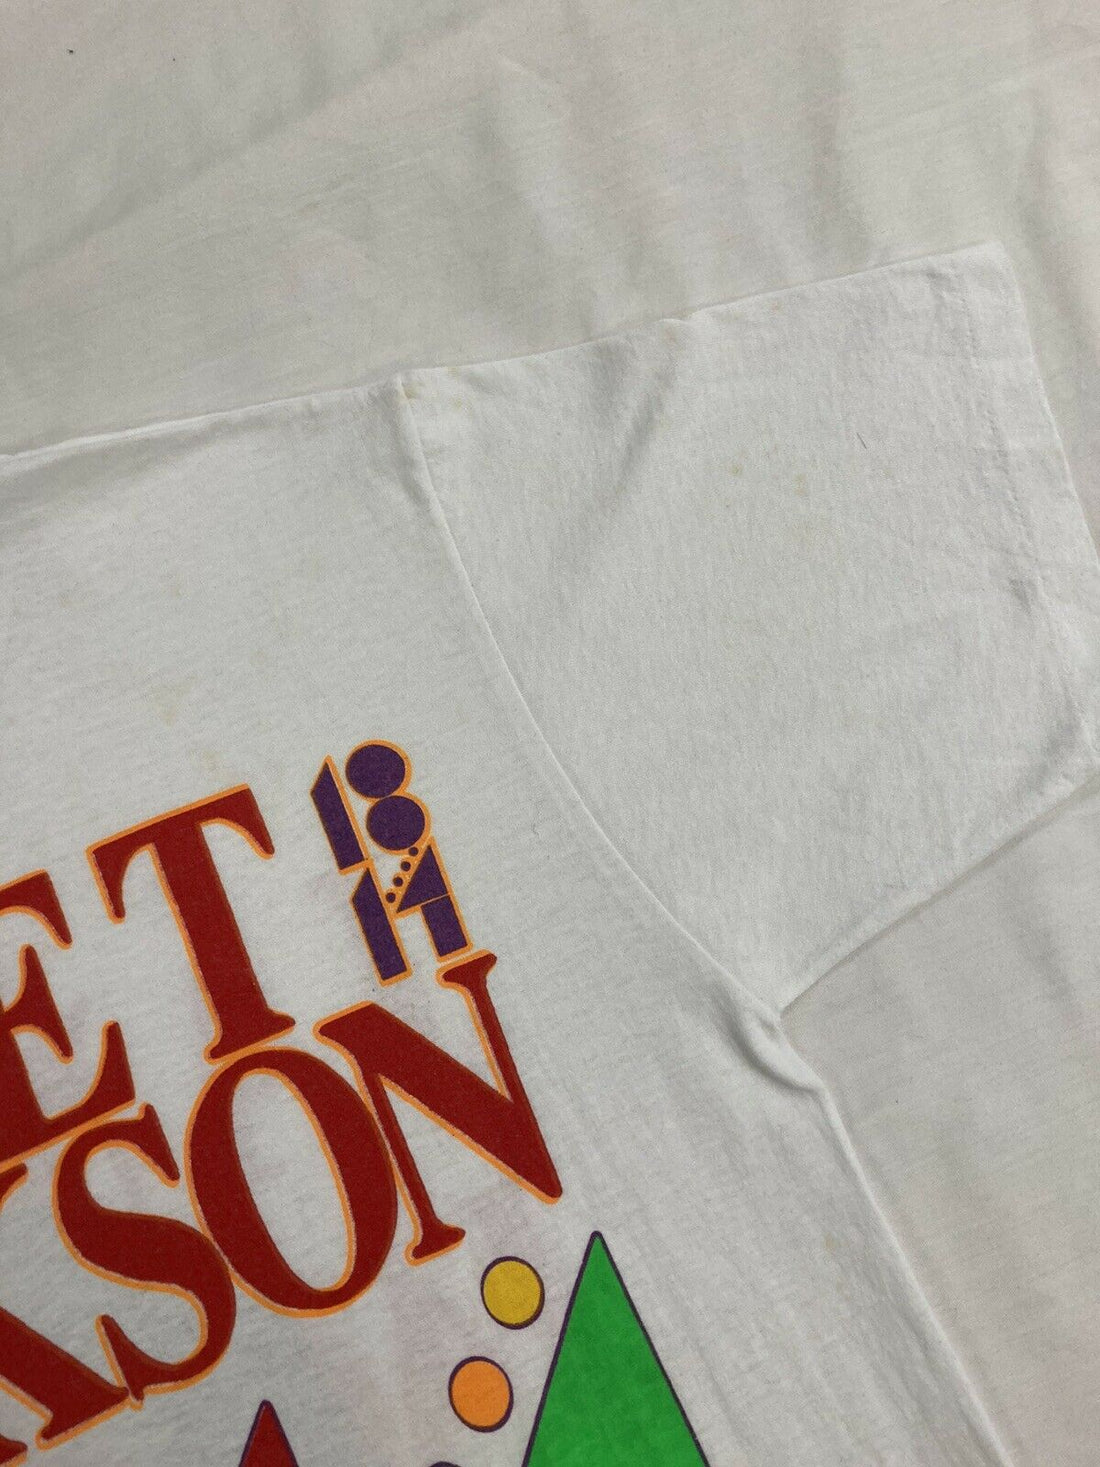 Janet Jackson Rhythm Nation 1814 Tour De Force T-Shirt Medium 90s Made USA VTG